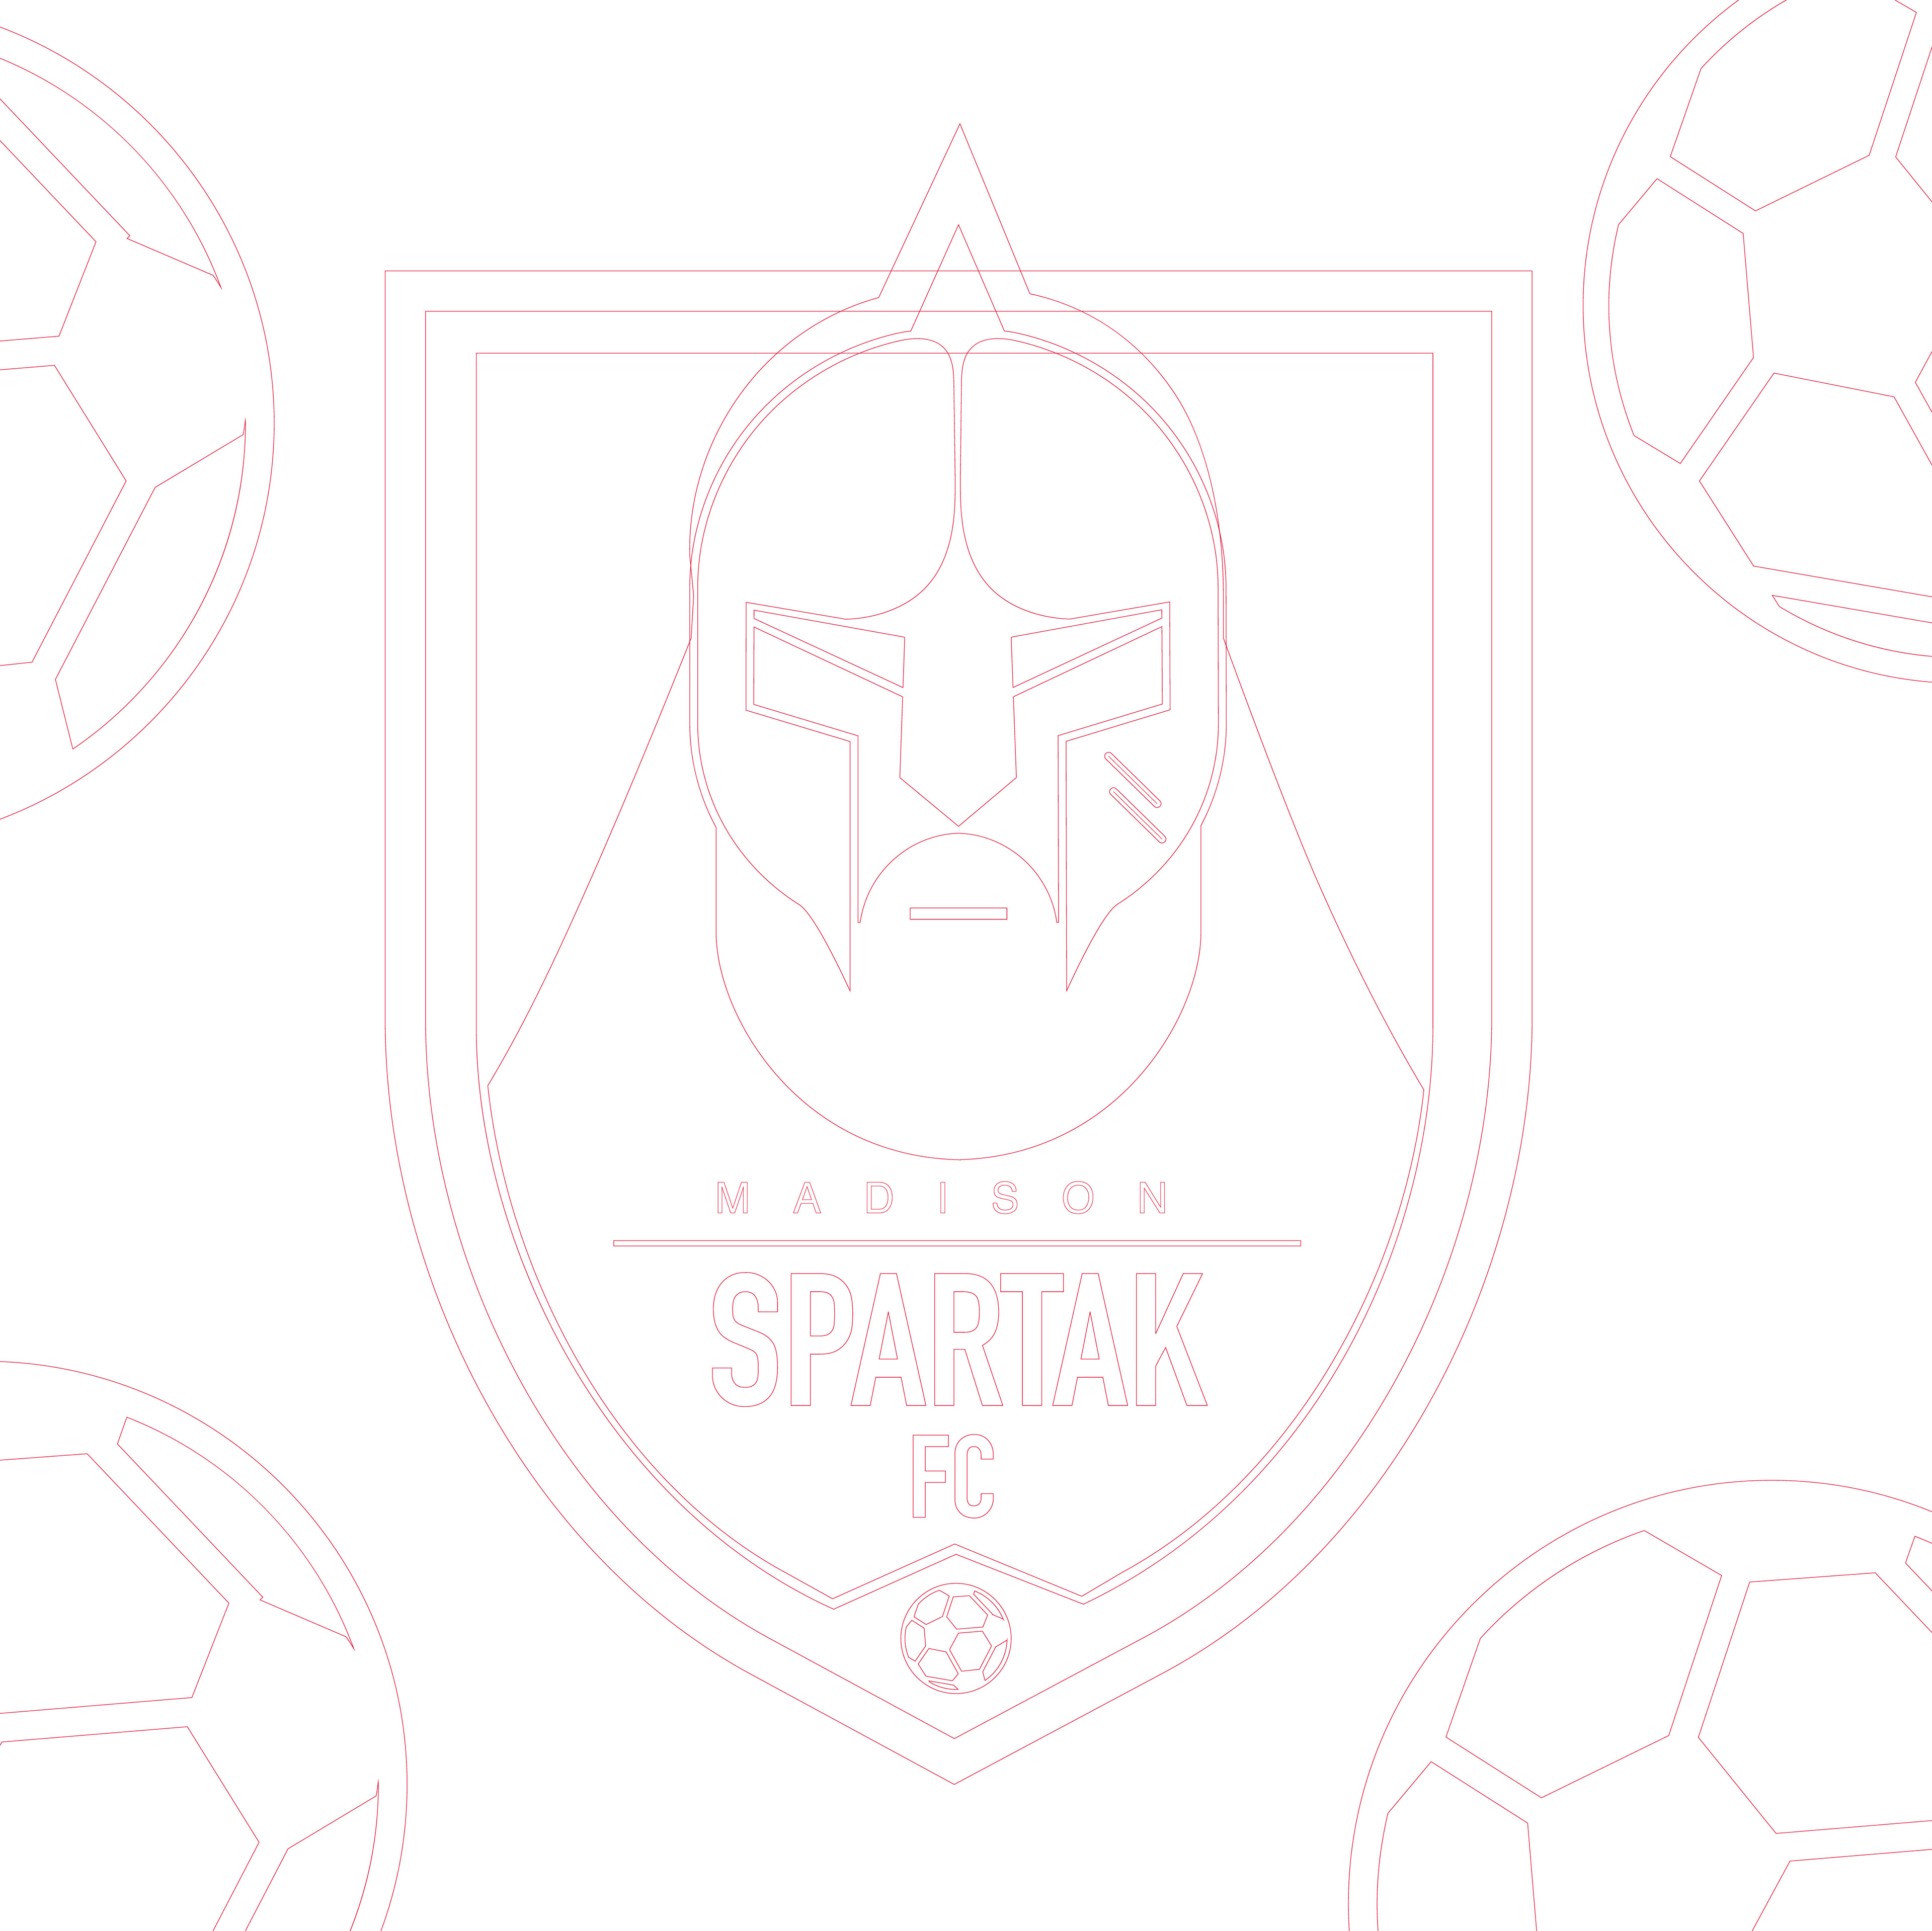 Damian Messori - Spartak - Madison Soccer Club